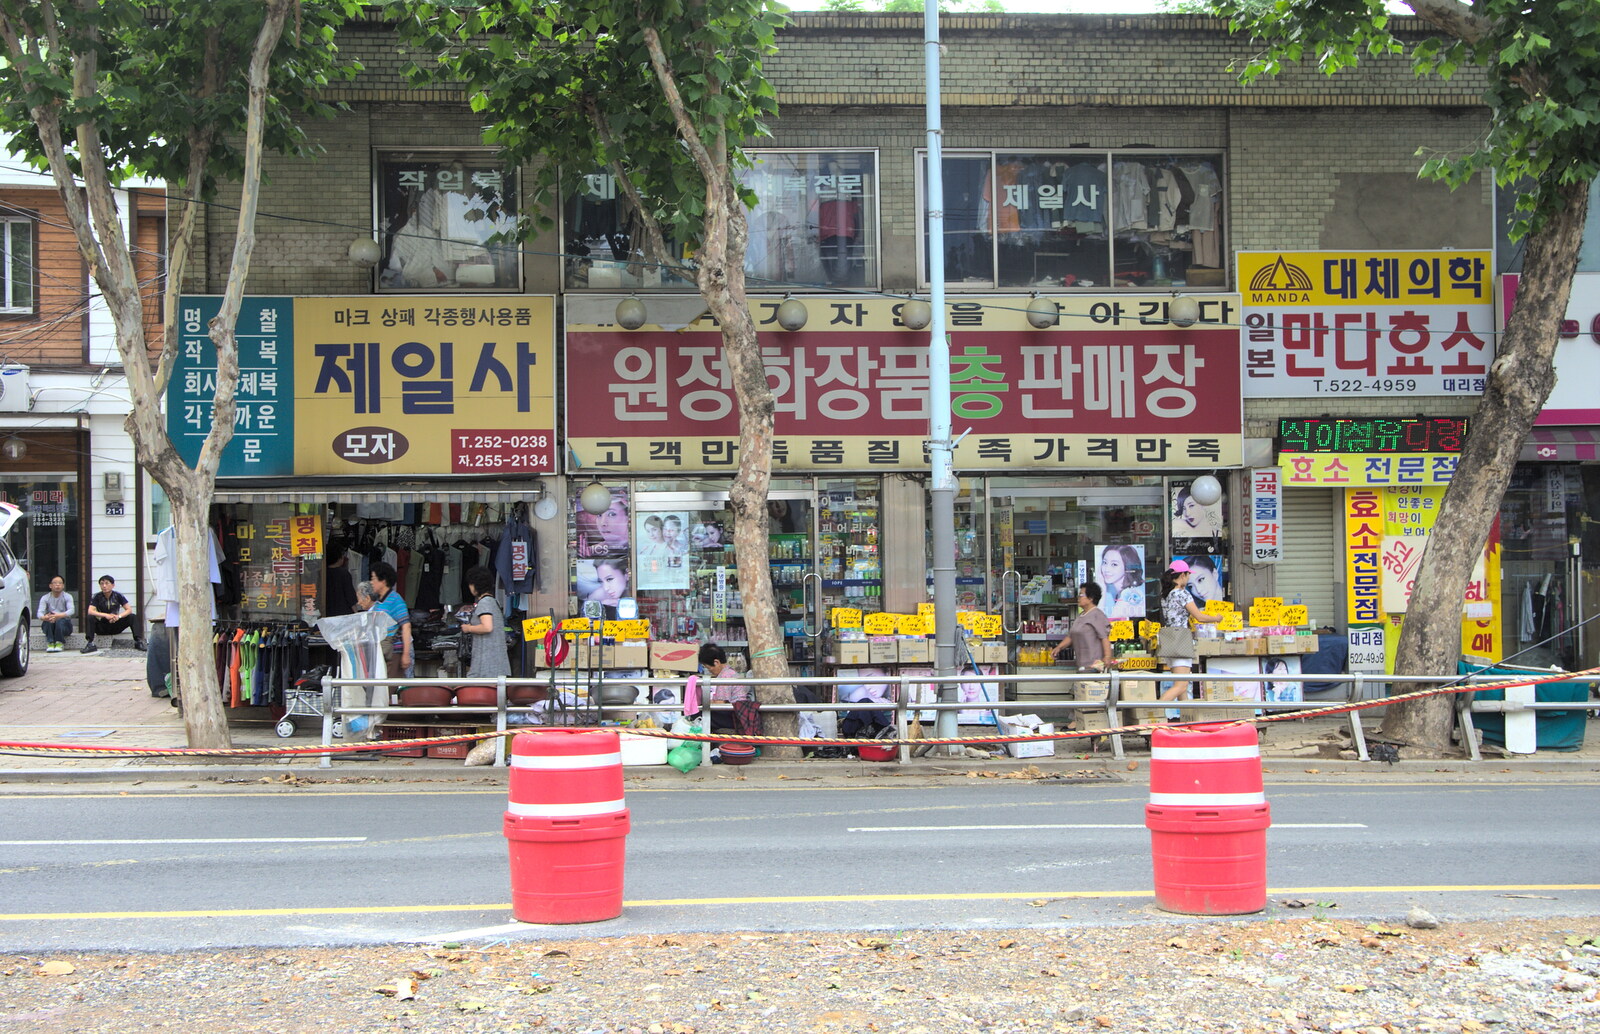 A row of shops from Seomun Market, Daegu, South Korea - 1st July 2012